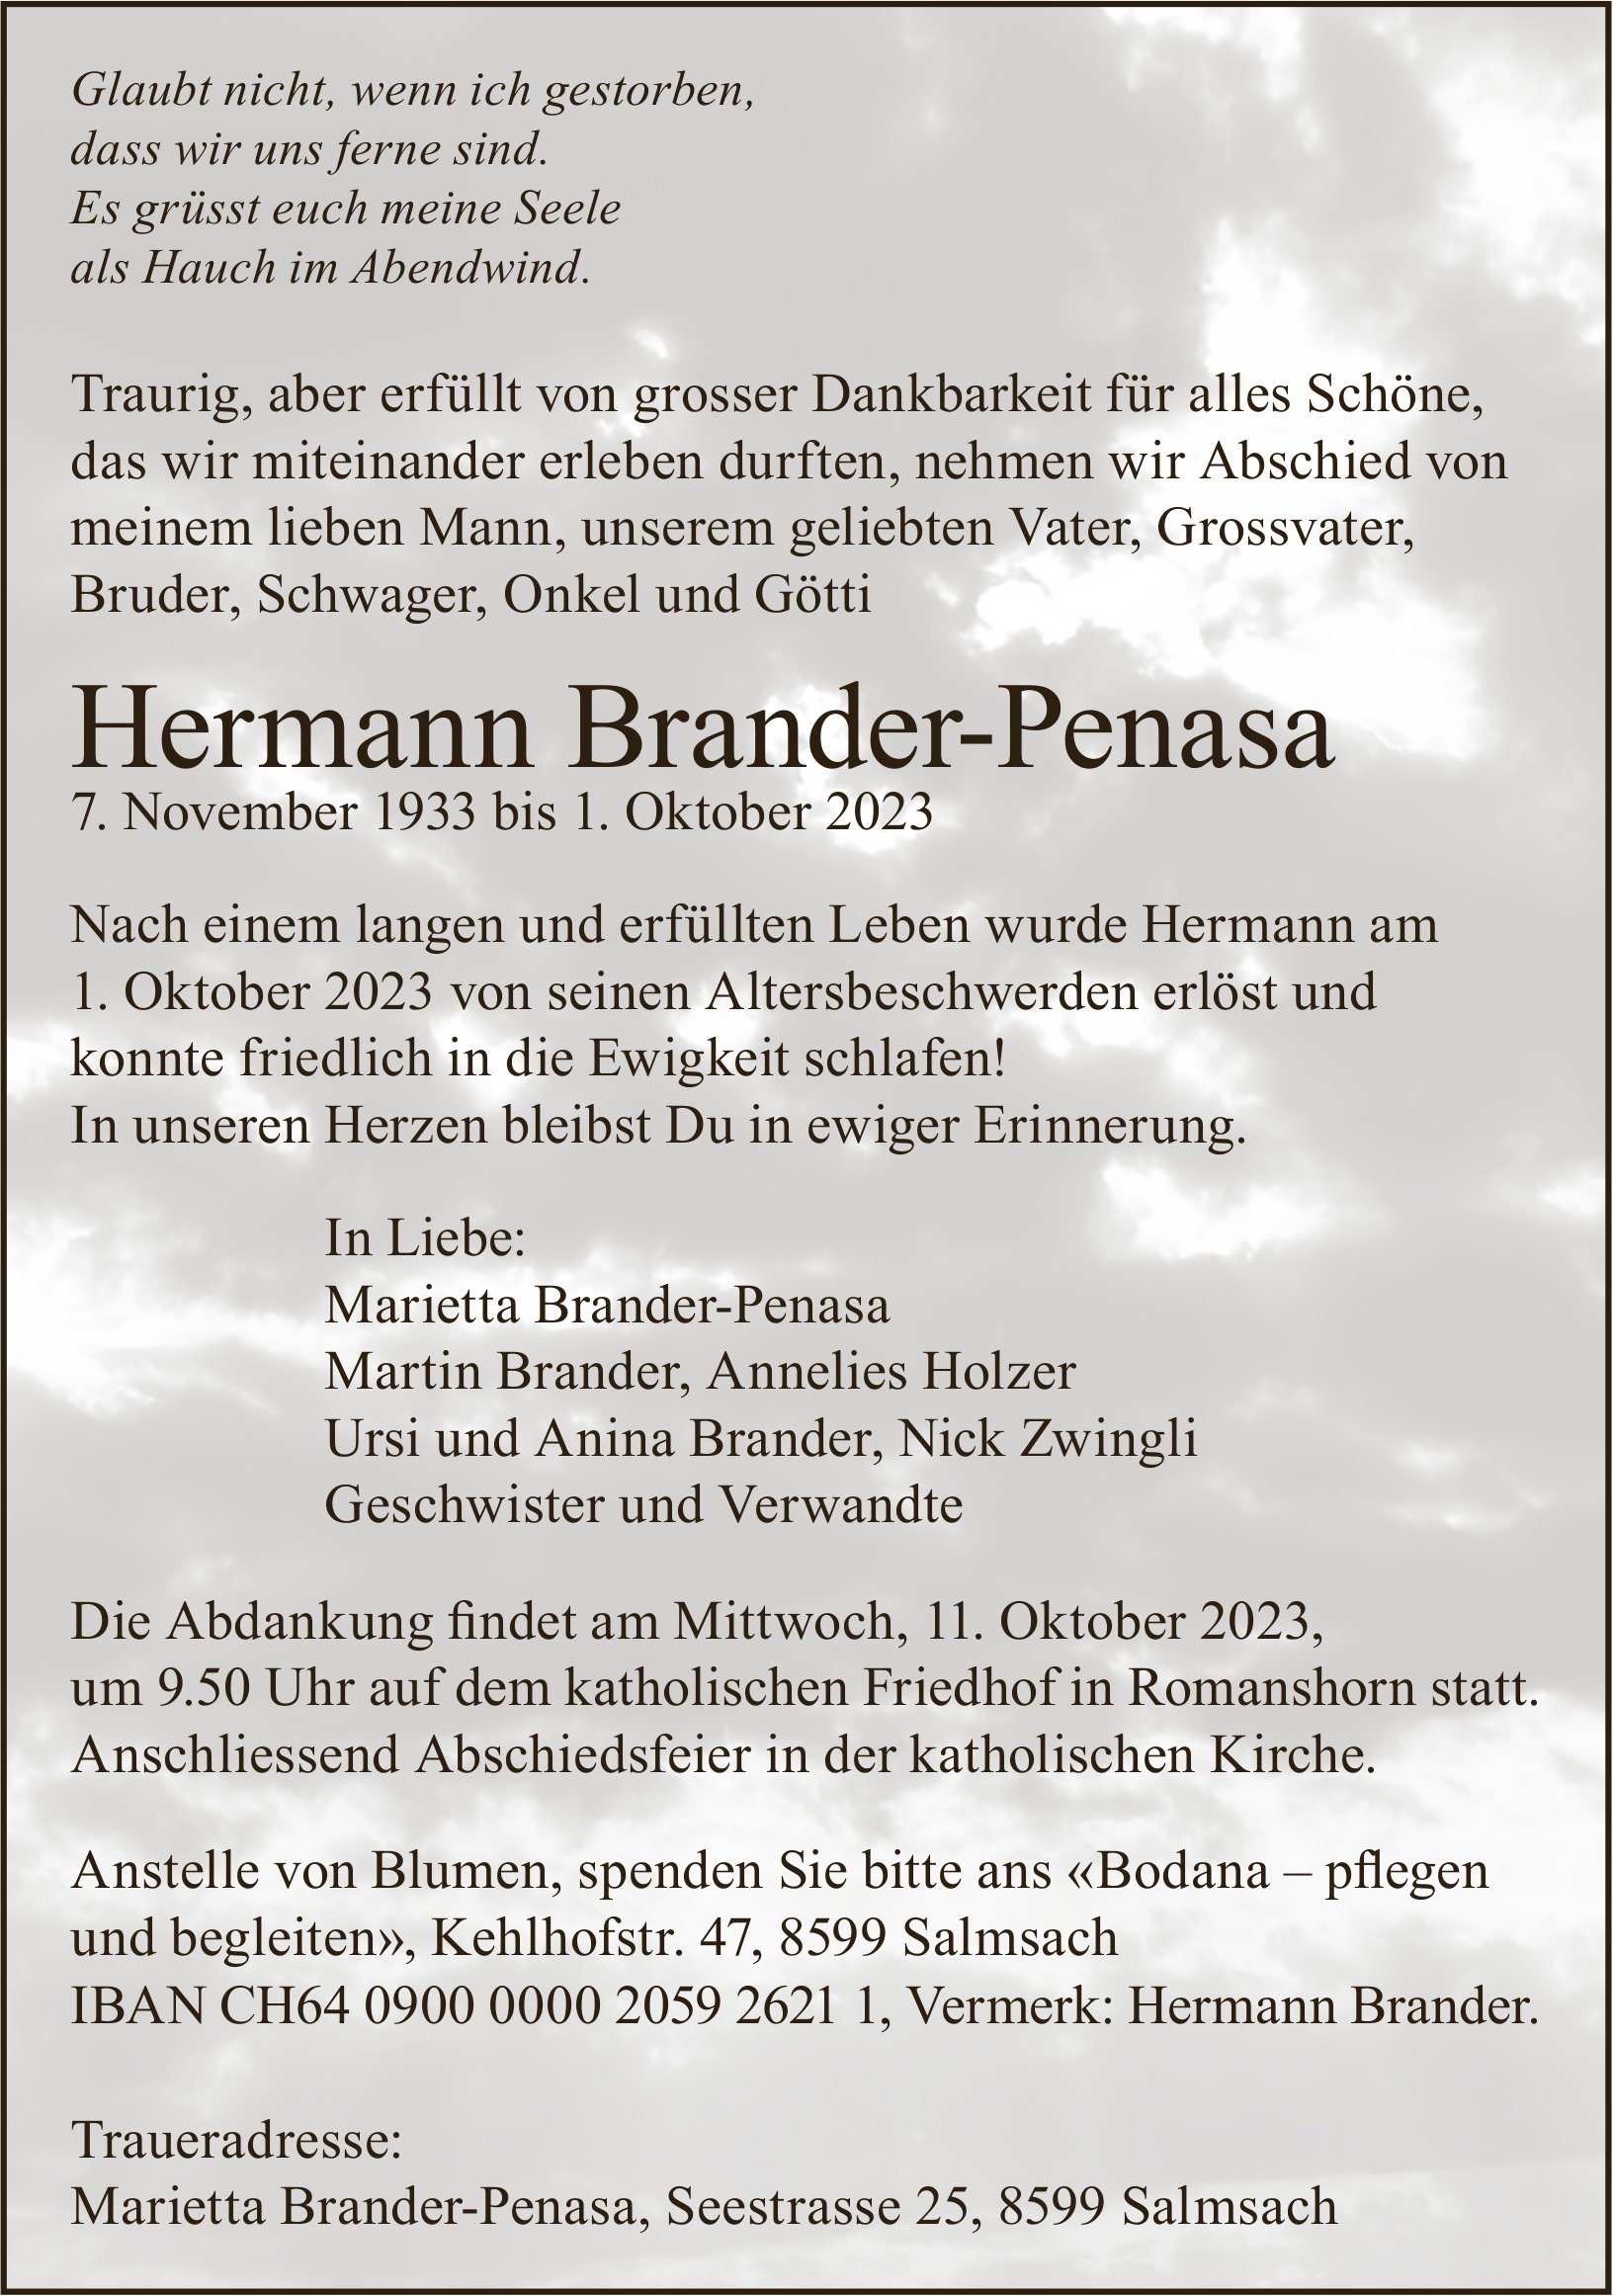 Hermann Brander-Penasa, Oktober 2023 / TA